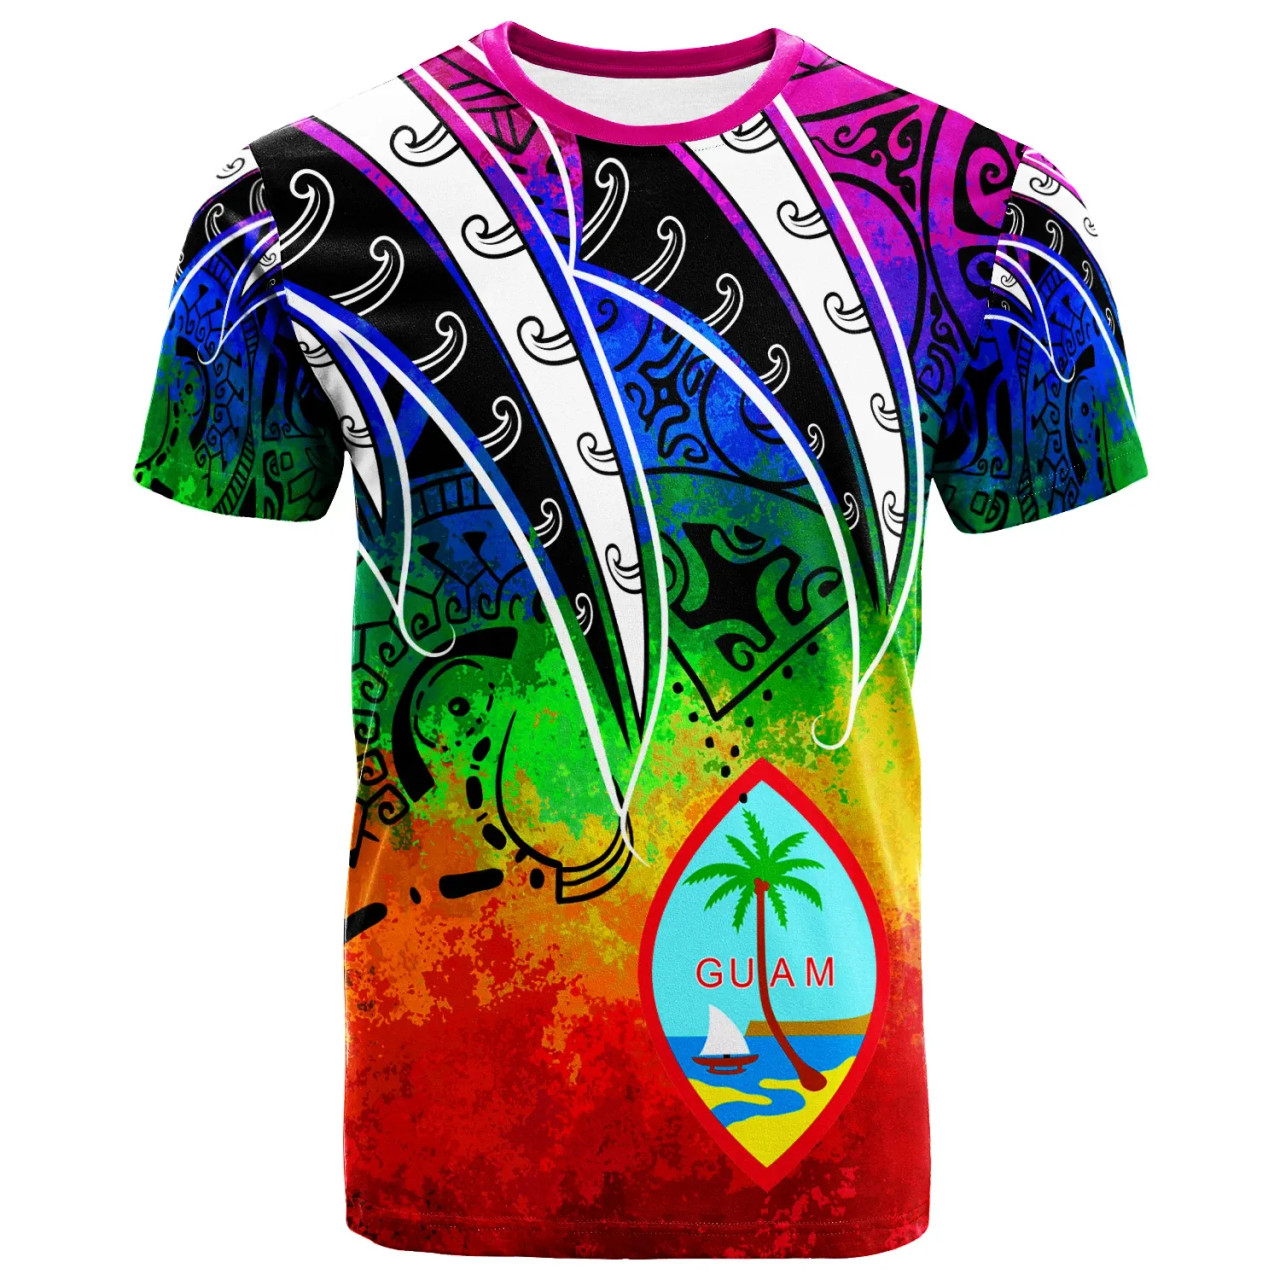 Guam T-Shirt - Tropical Leaf Rainbow Color 1